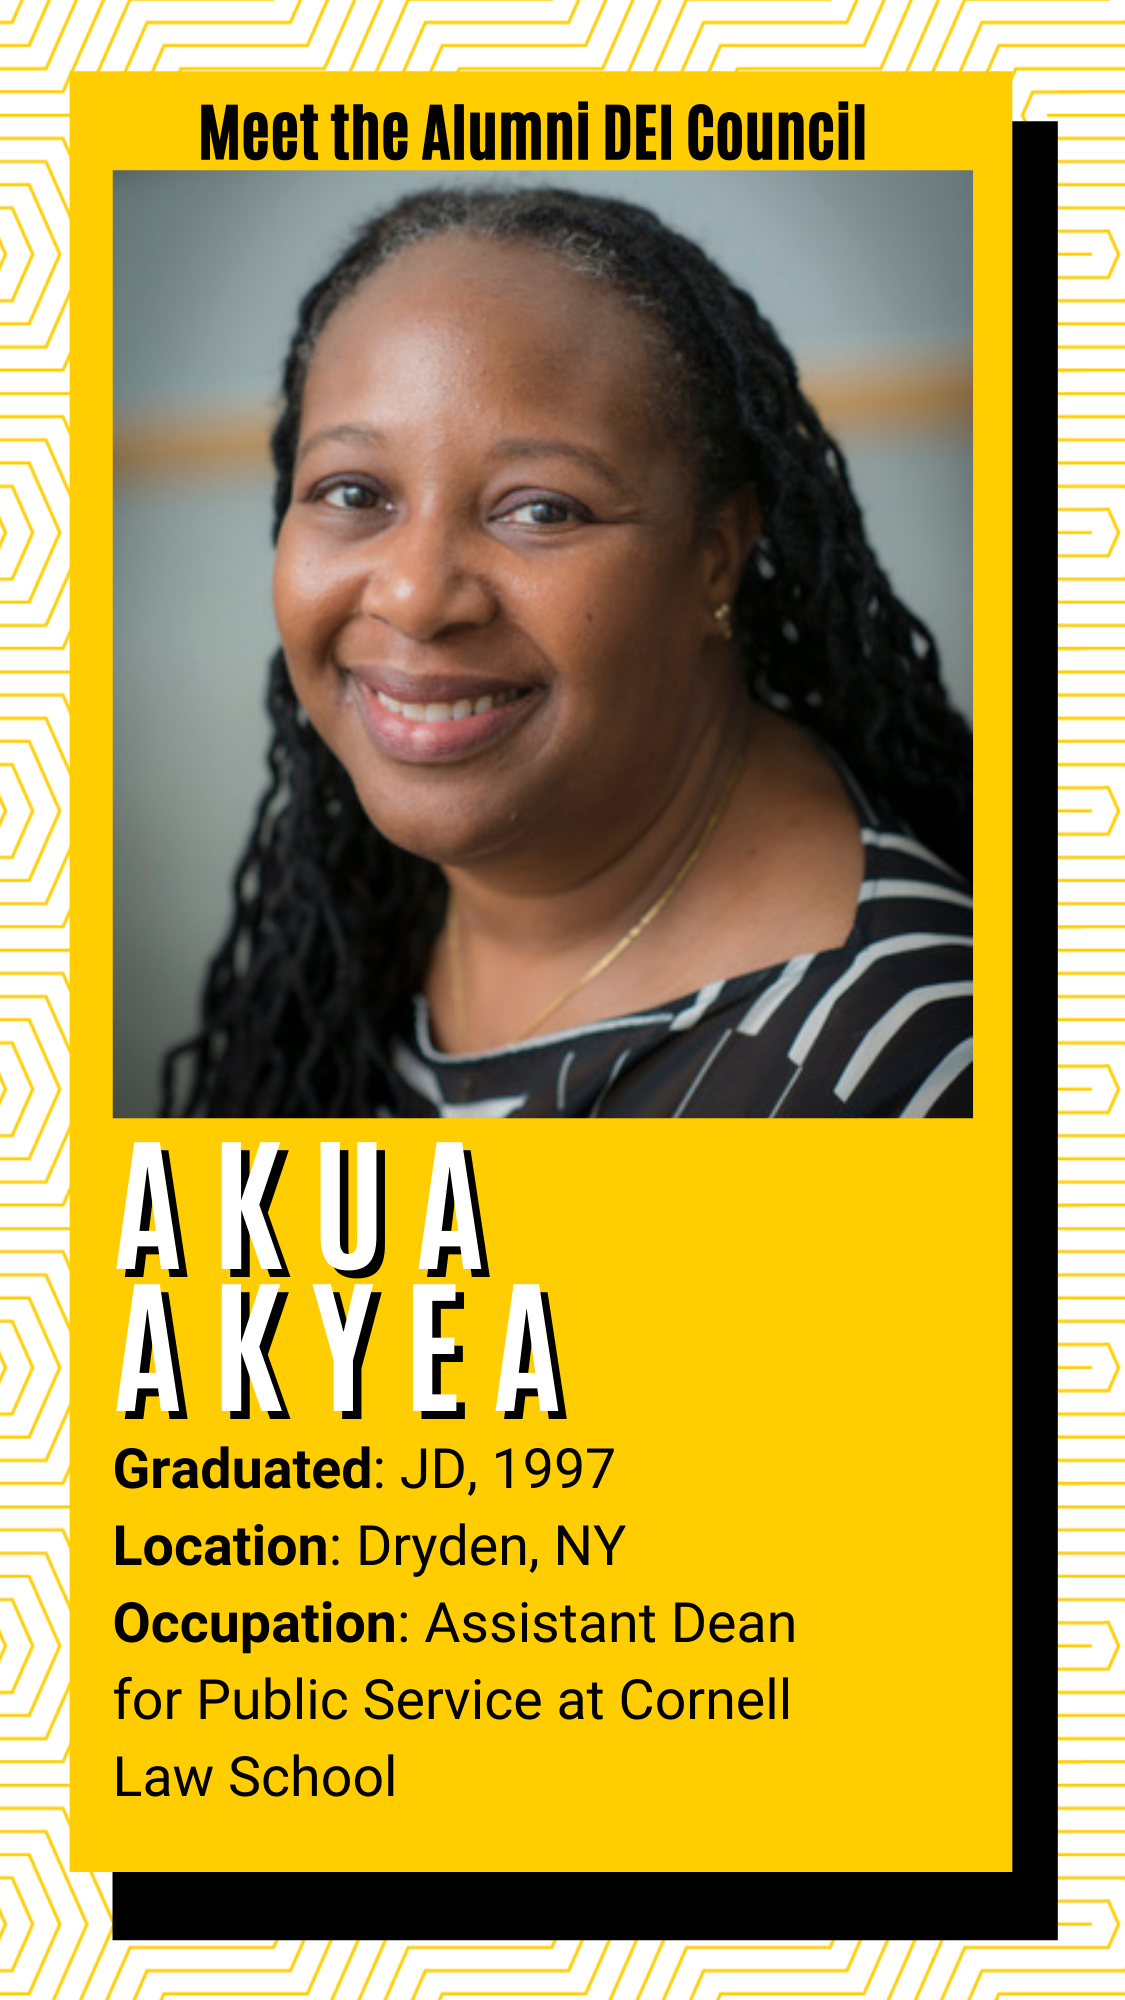 Meet the Alumni DEI Council - Akua Akyea